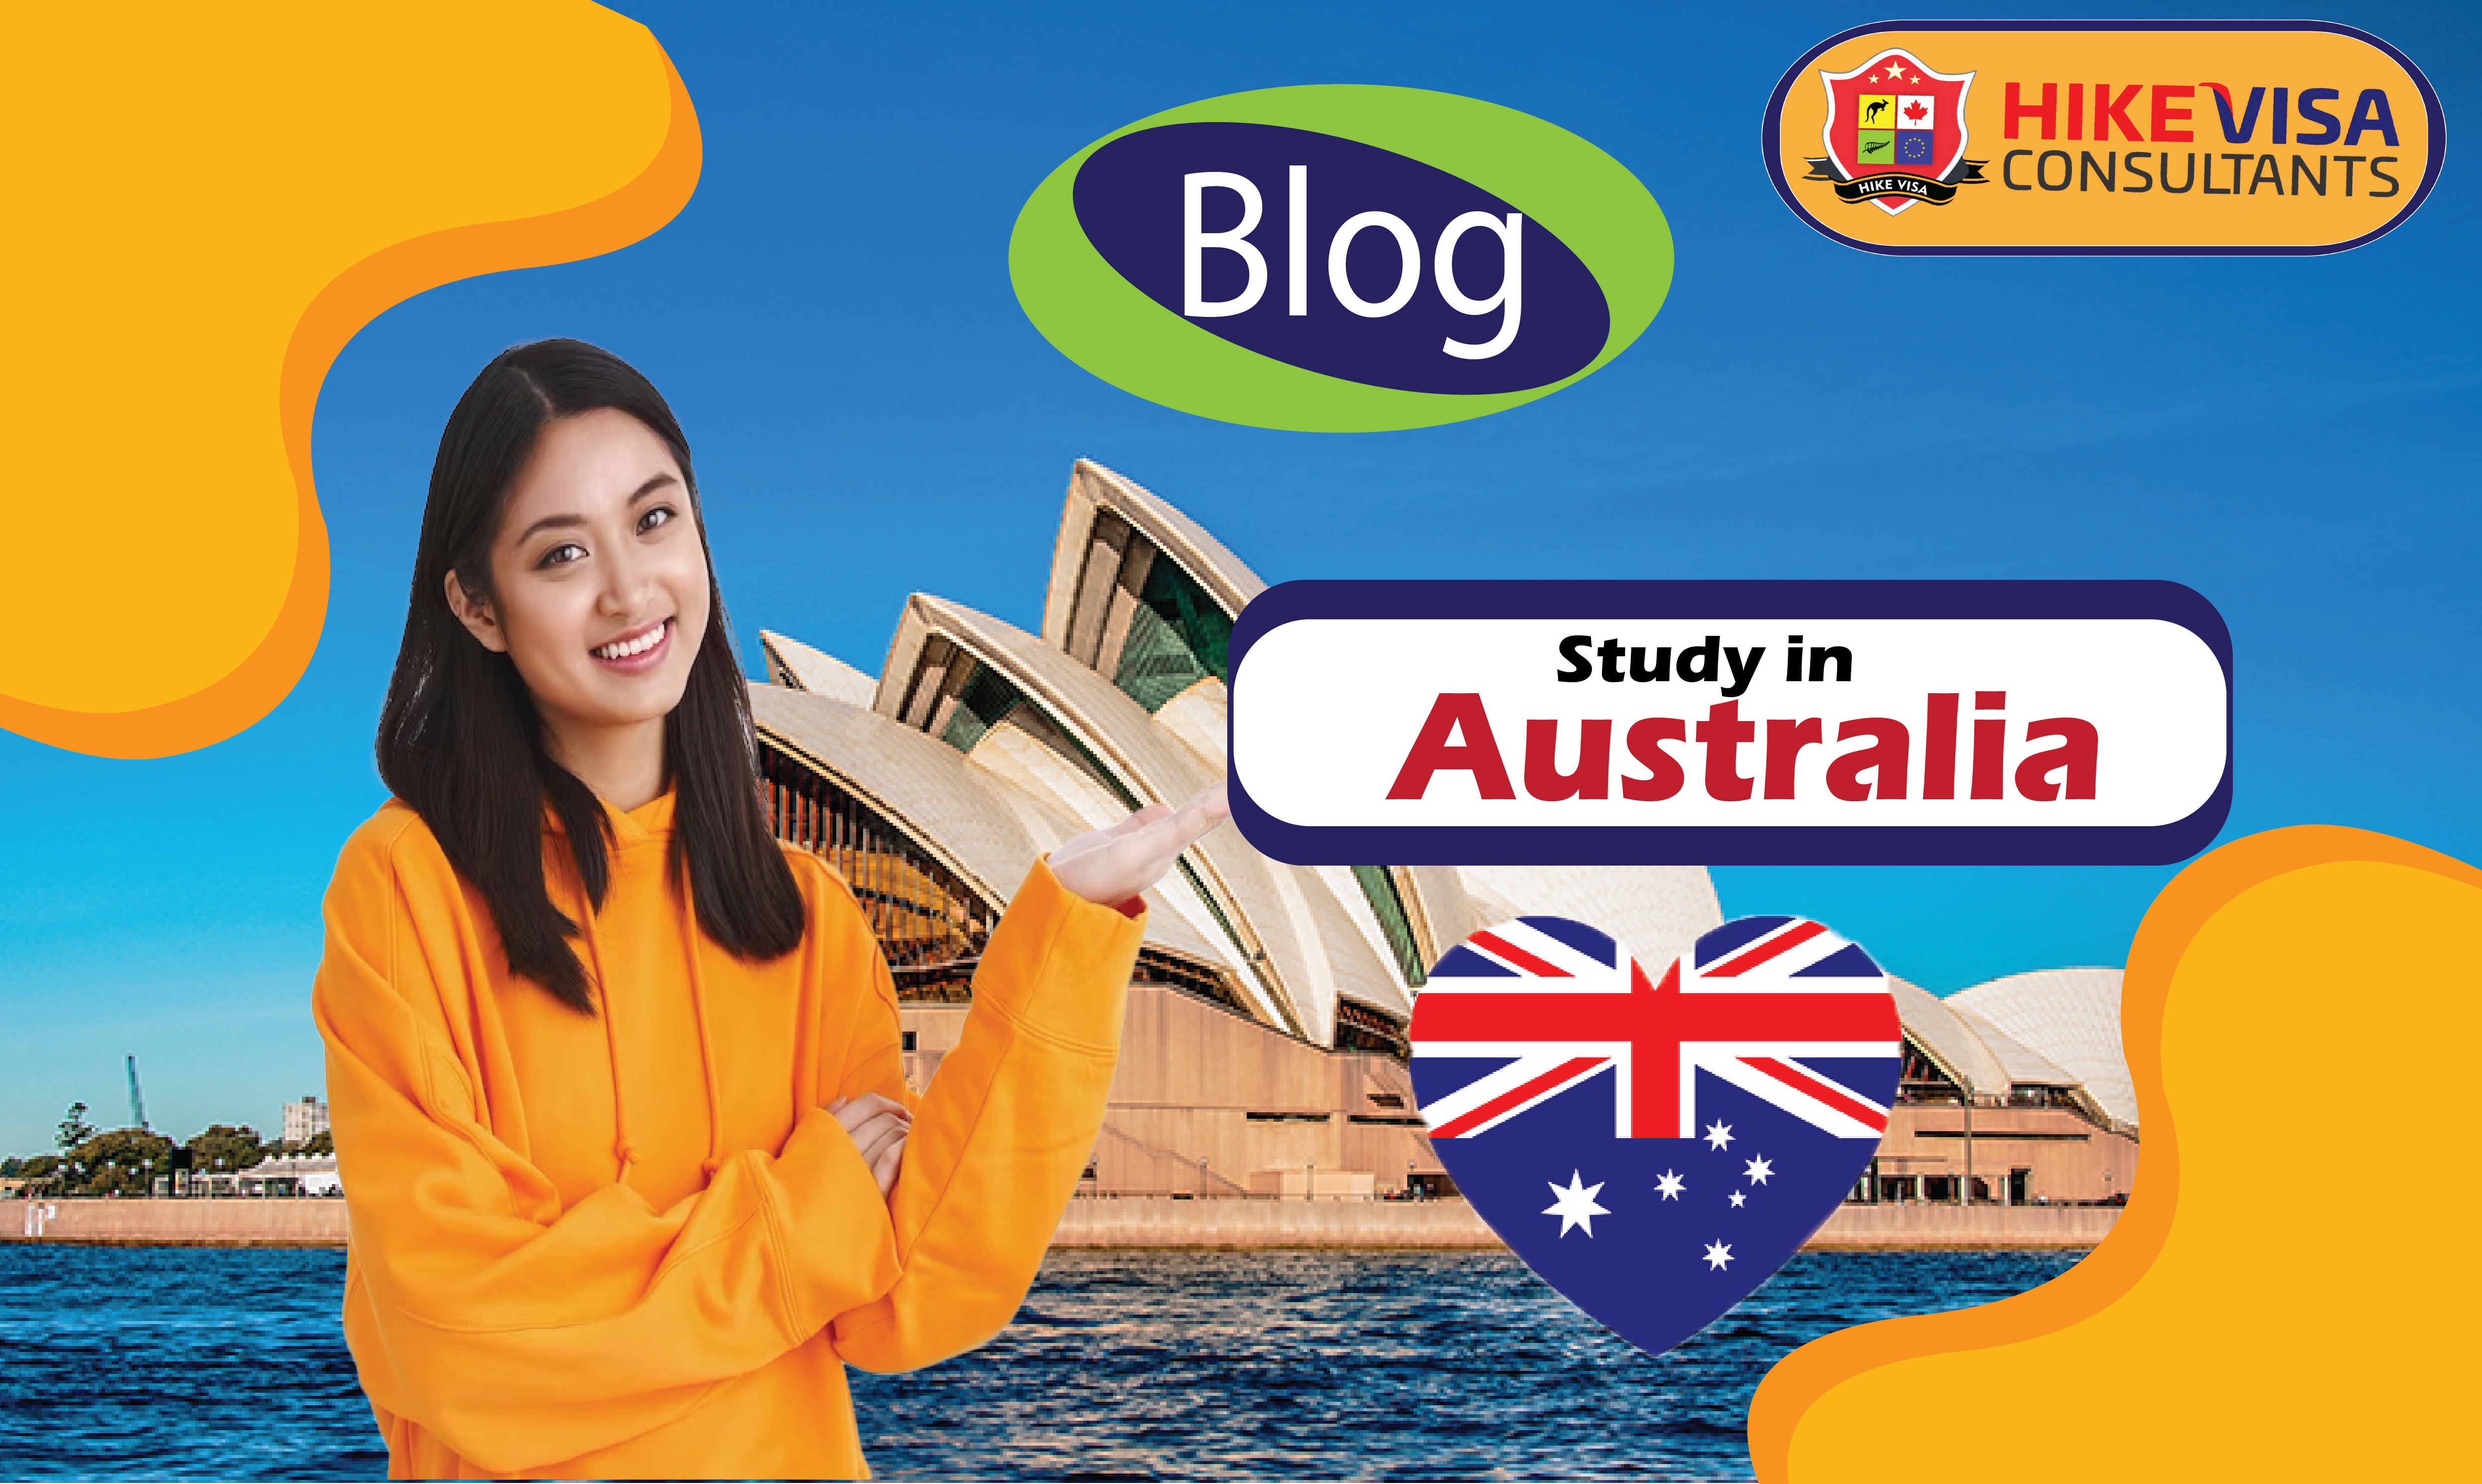 Blog about study visa in Australia